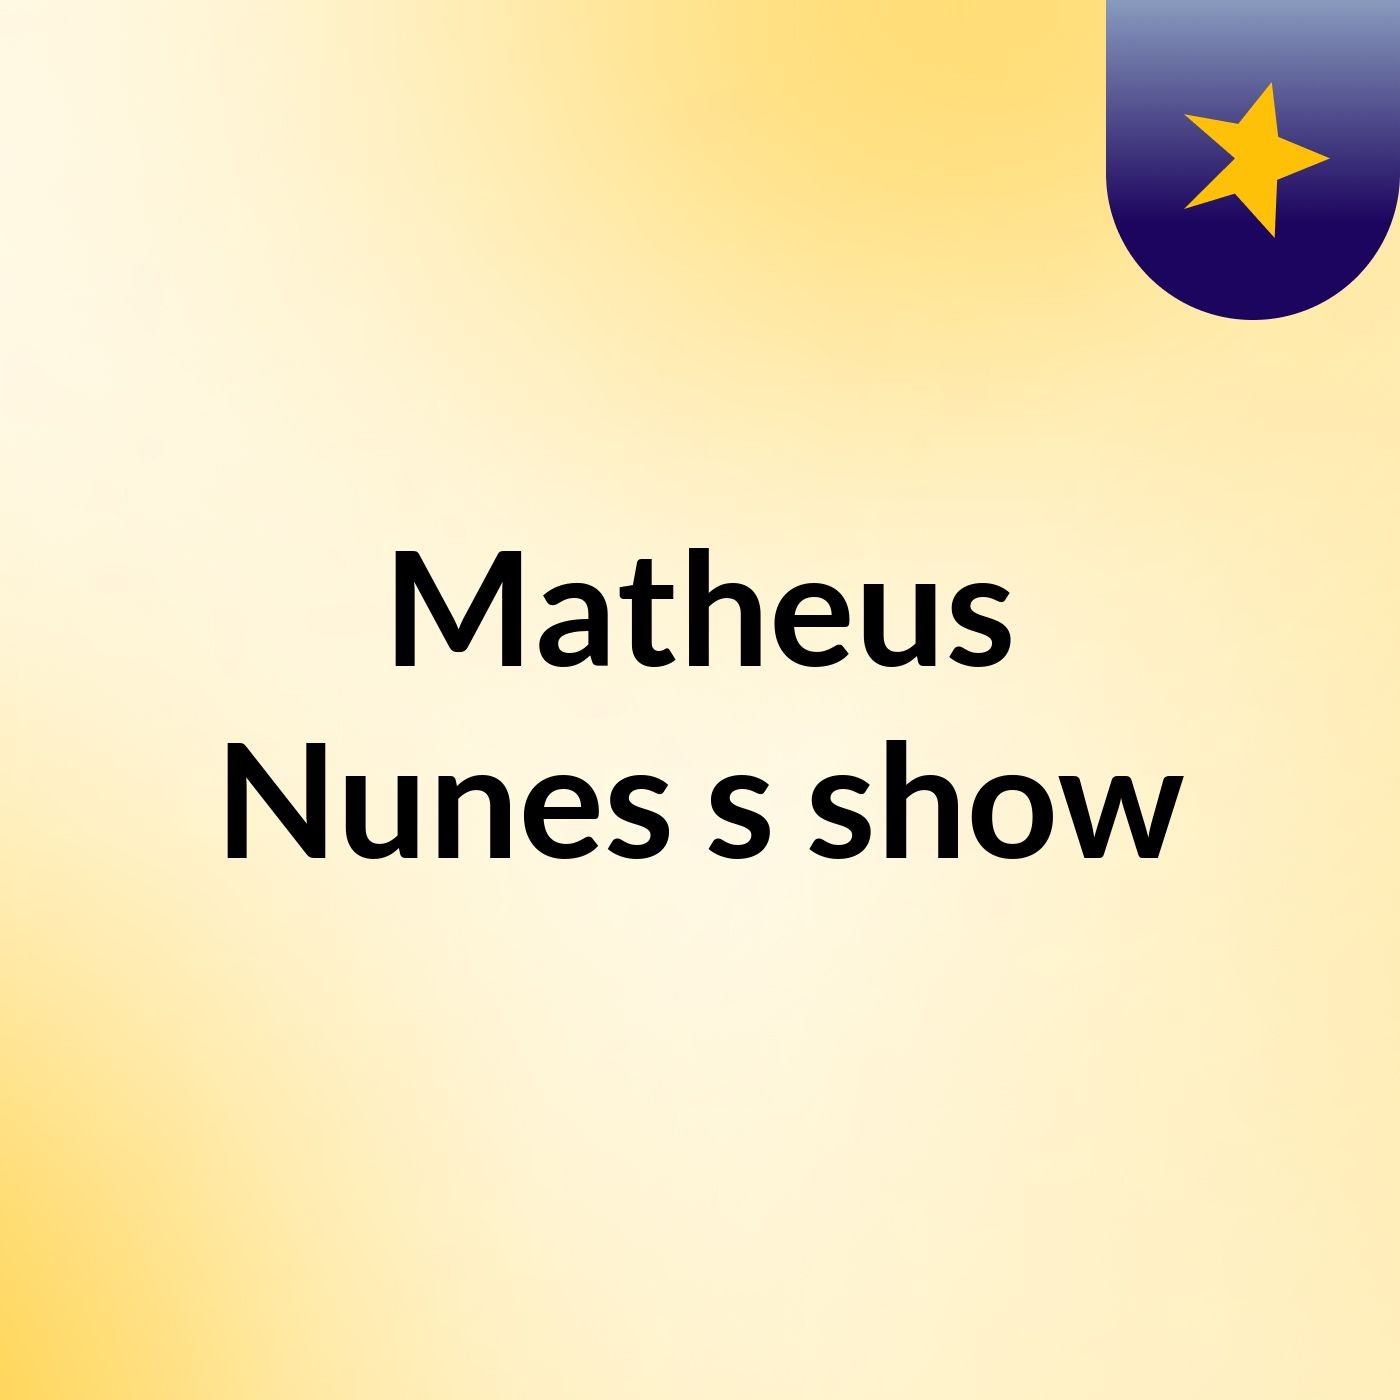 Matheus Nunes's show